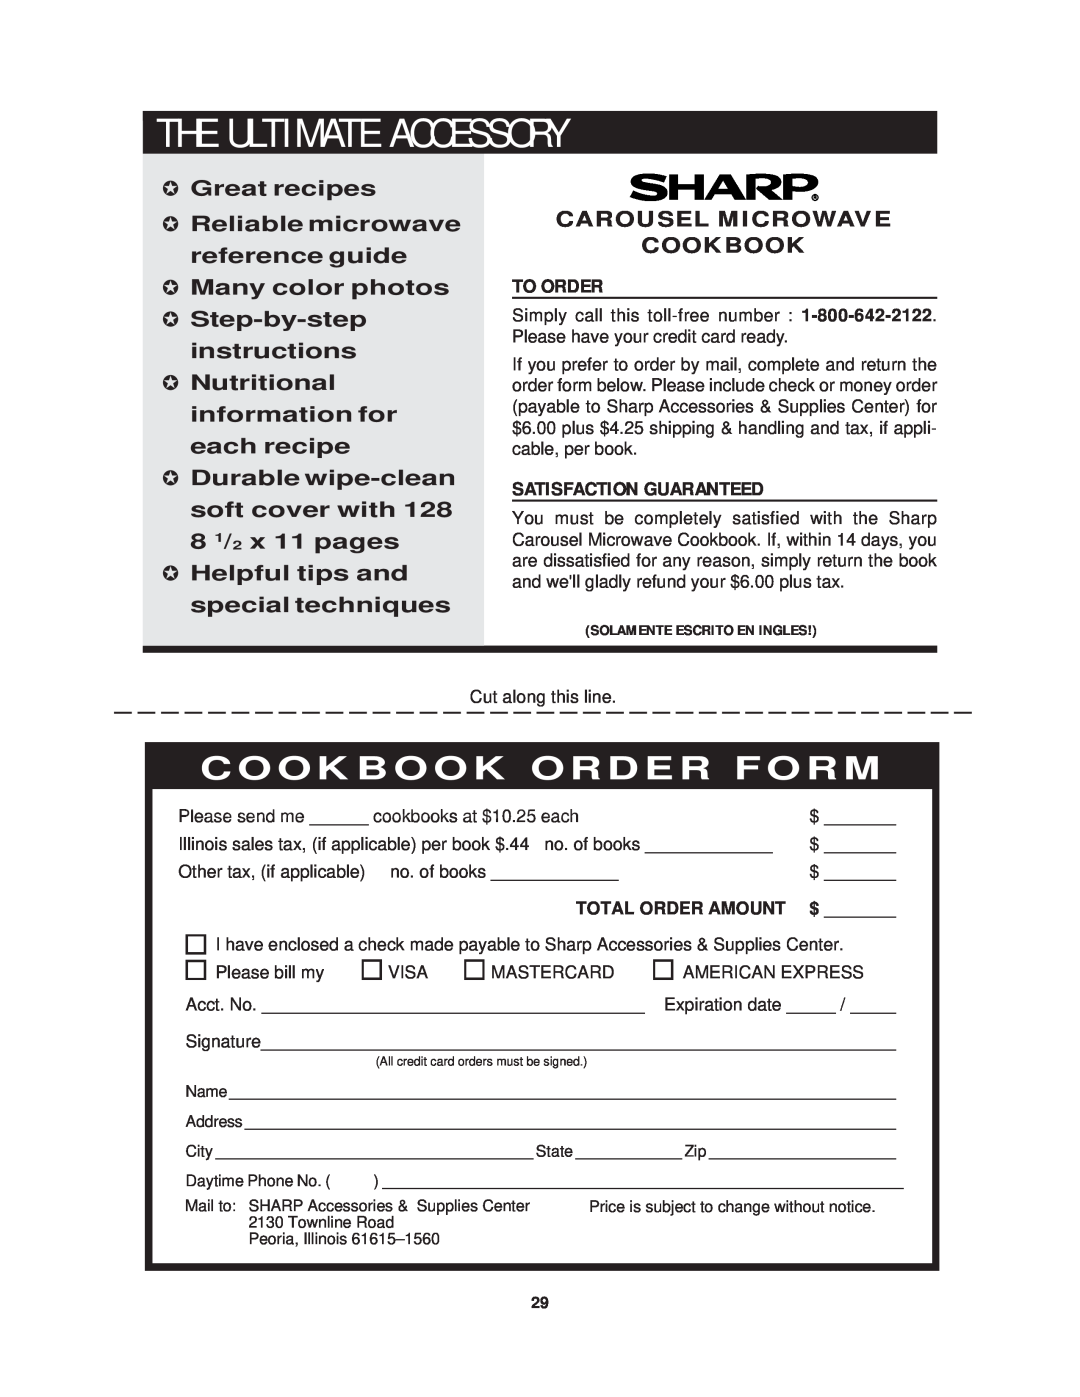 Sharp R-1214 T H E U L T I M A T E A C C E S S O R Y, Total Order Amount, Cookbook Order Form, Satisfaction Guaranteed 